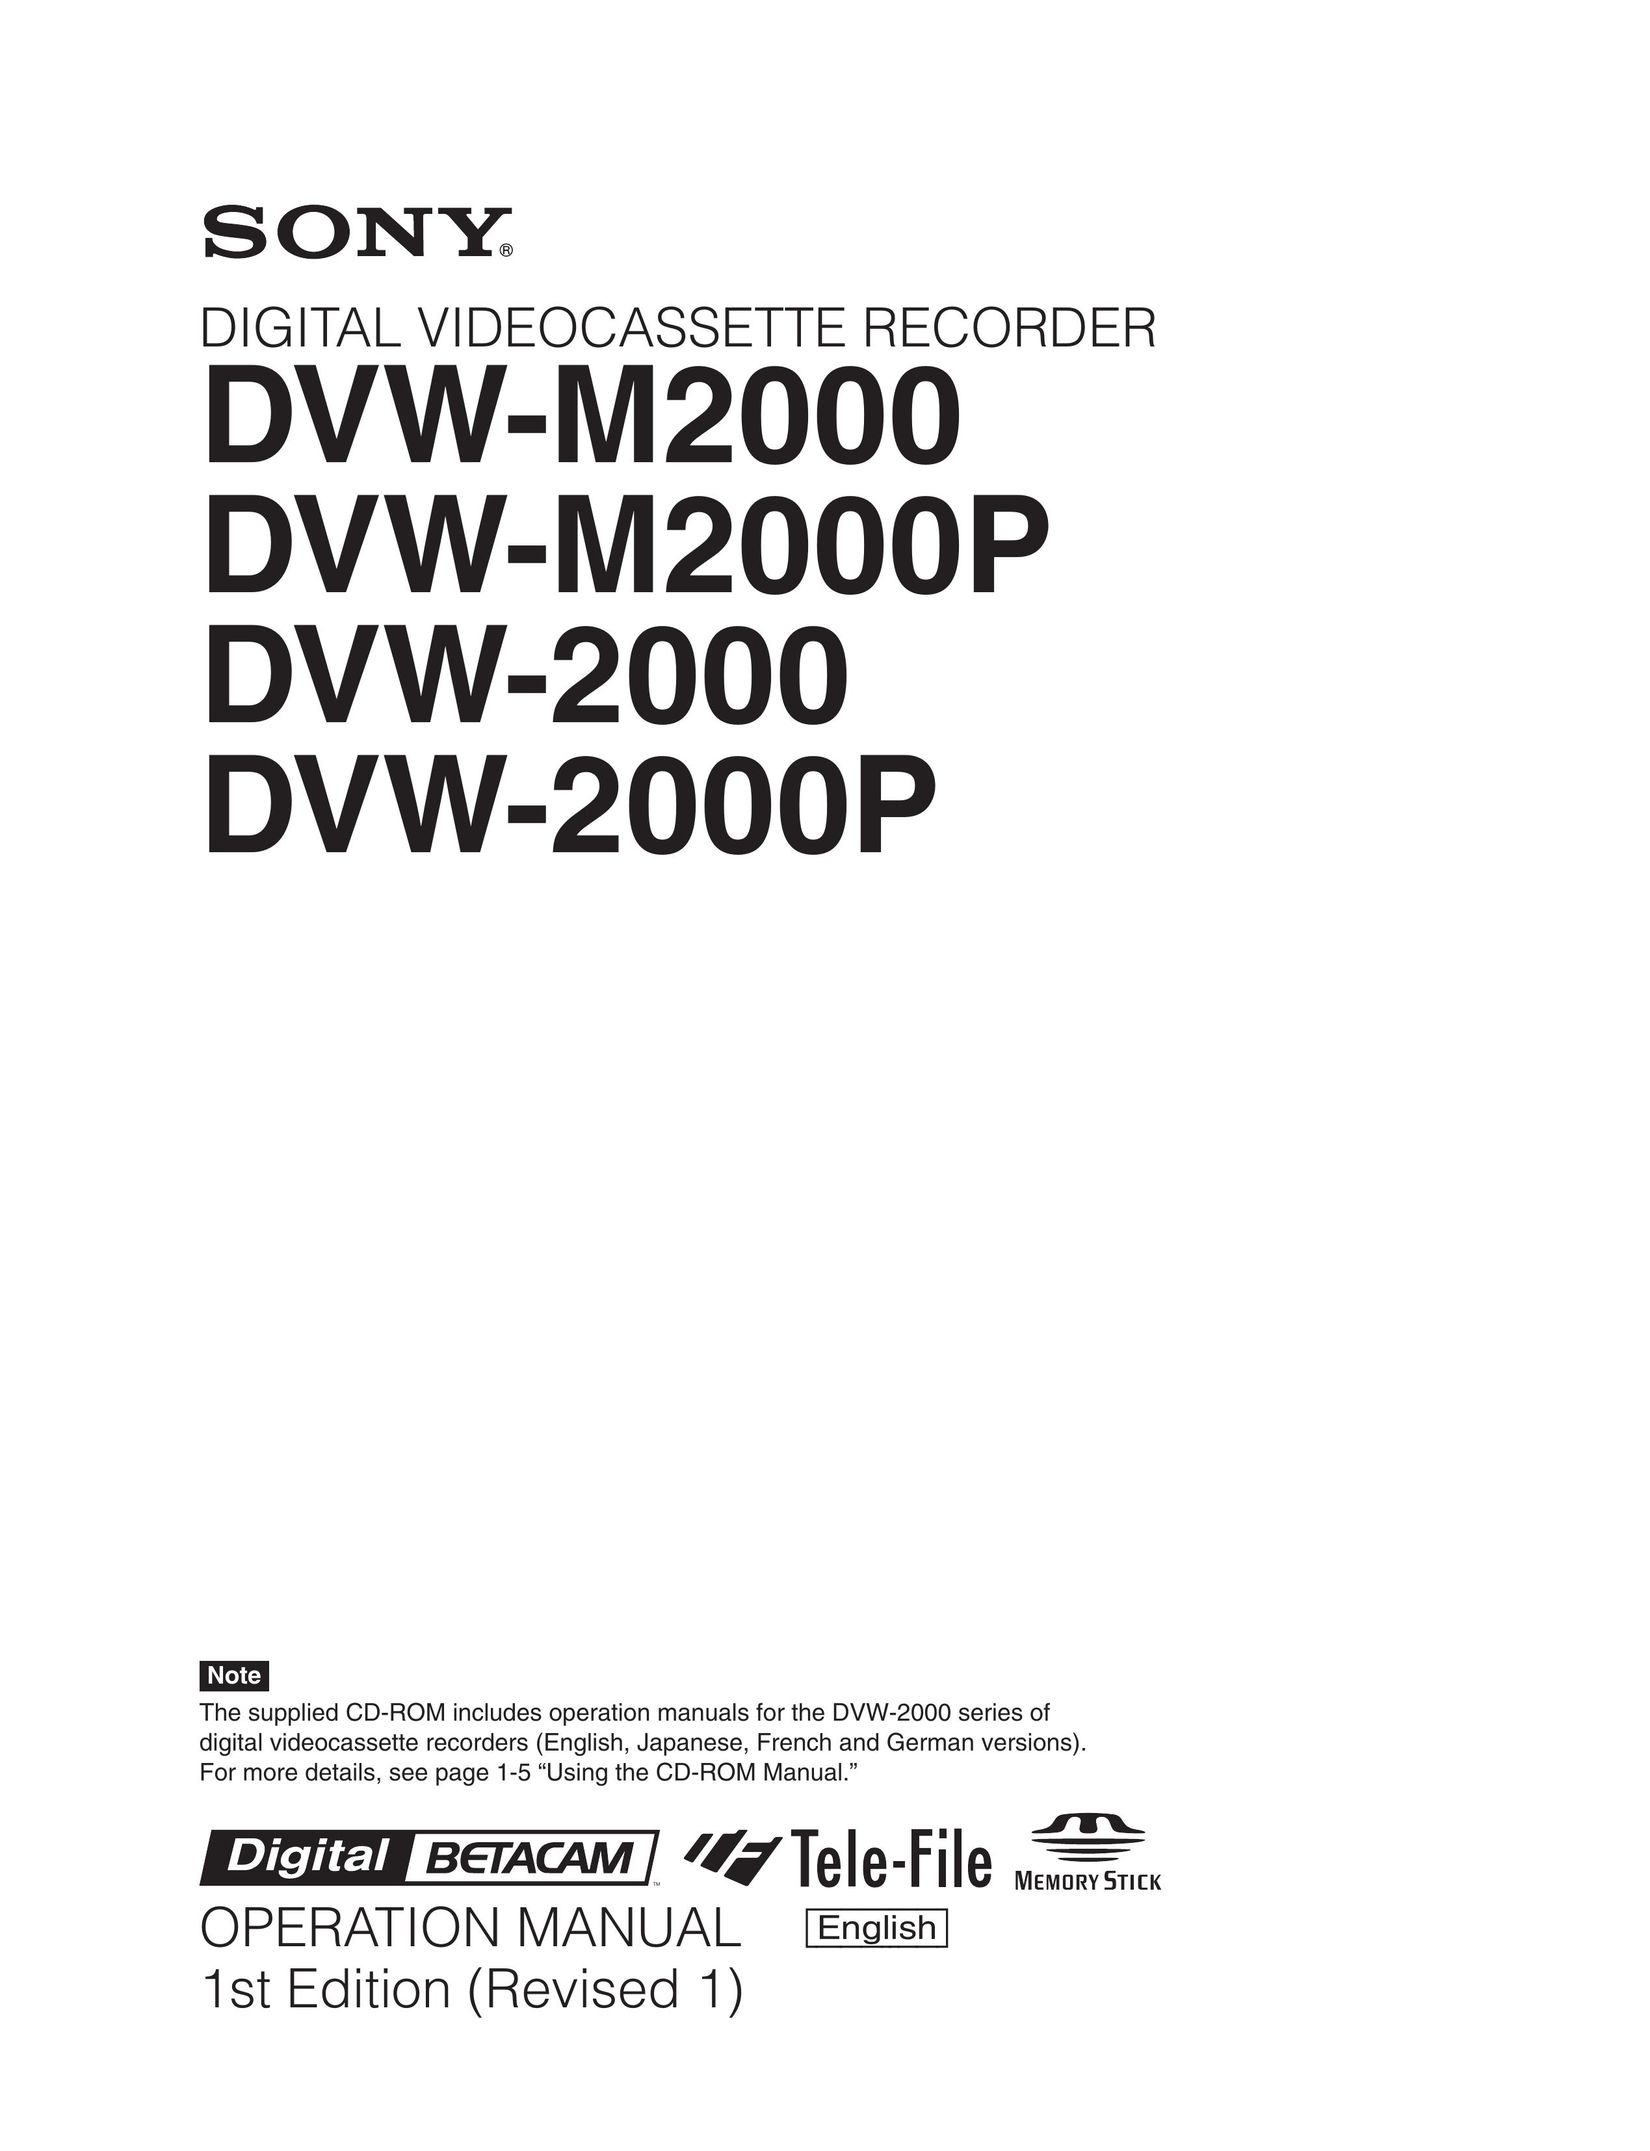 Sony DVW-2000 VCR User Manual